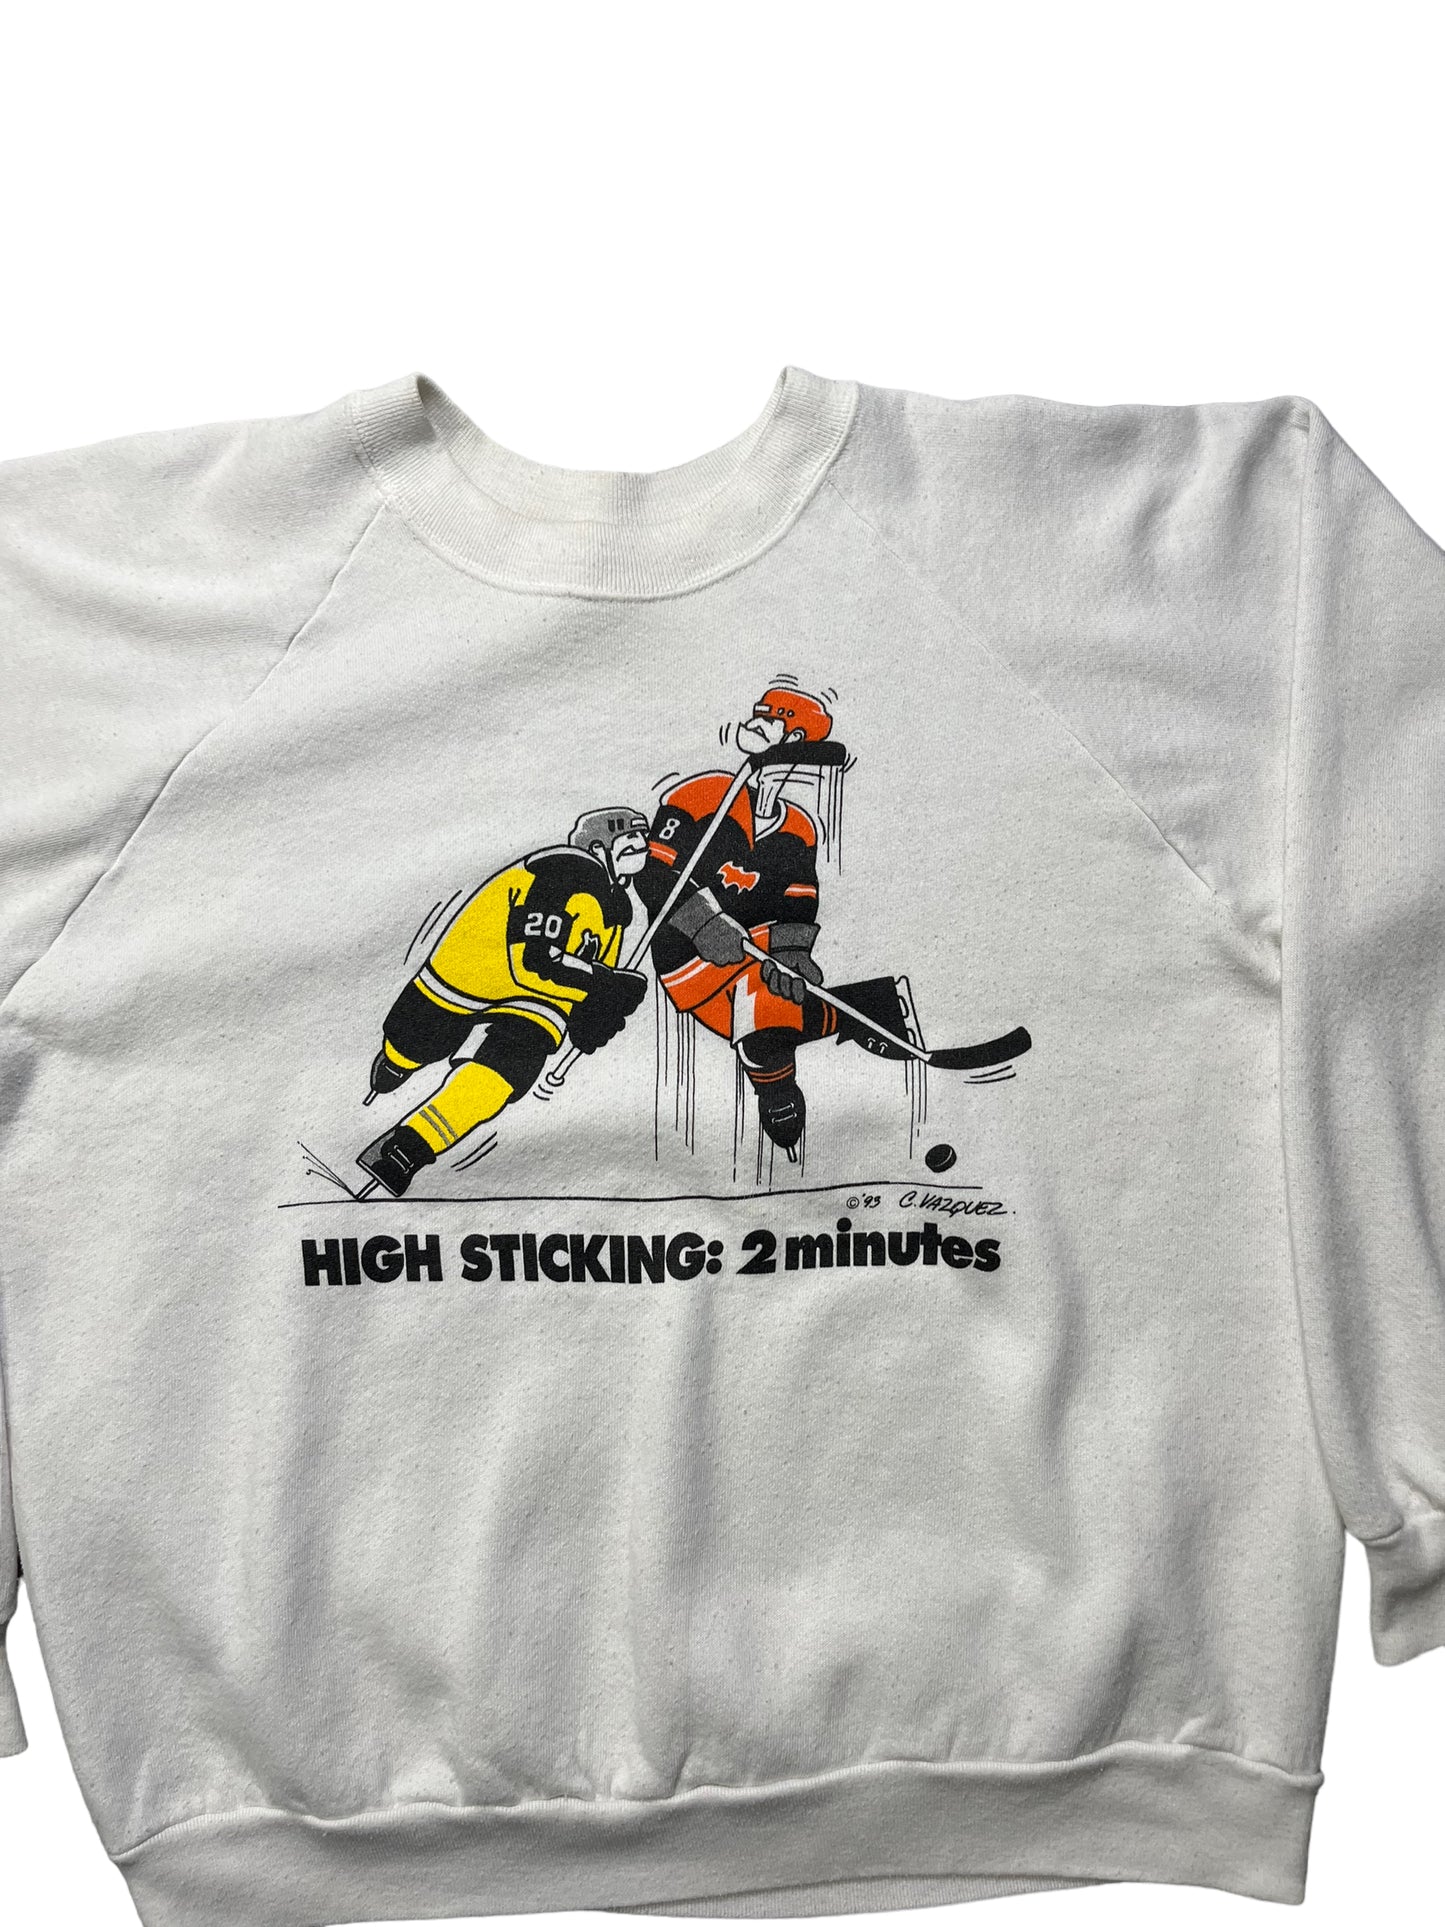 (S/M) 1993 Penguins High Sticking Crewneck